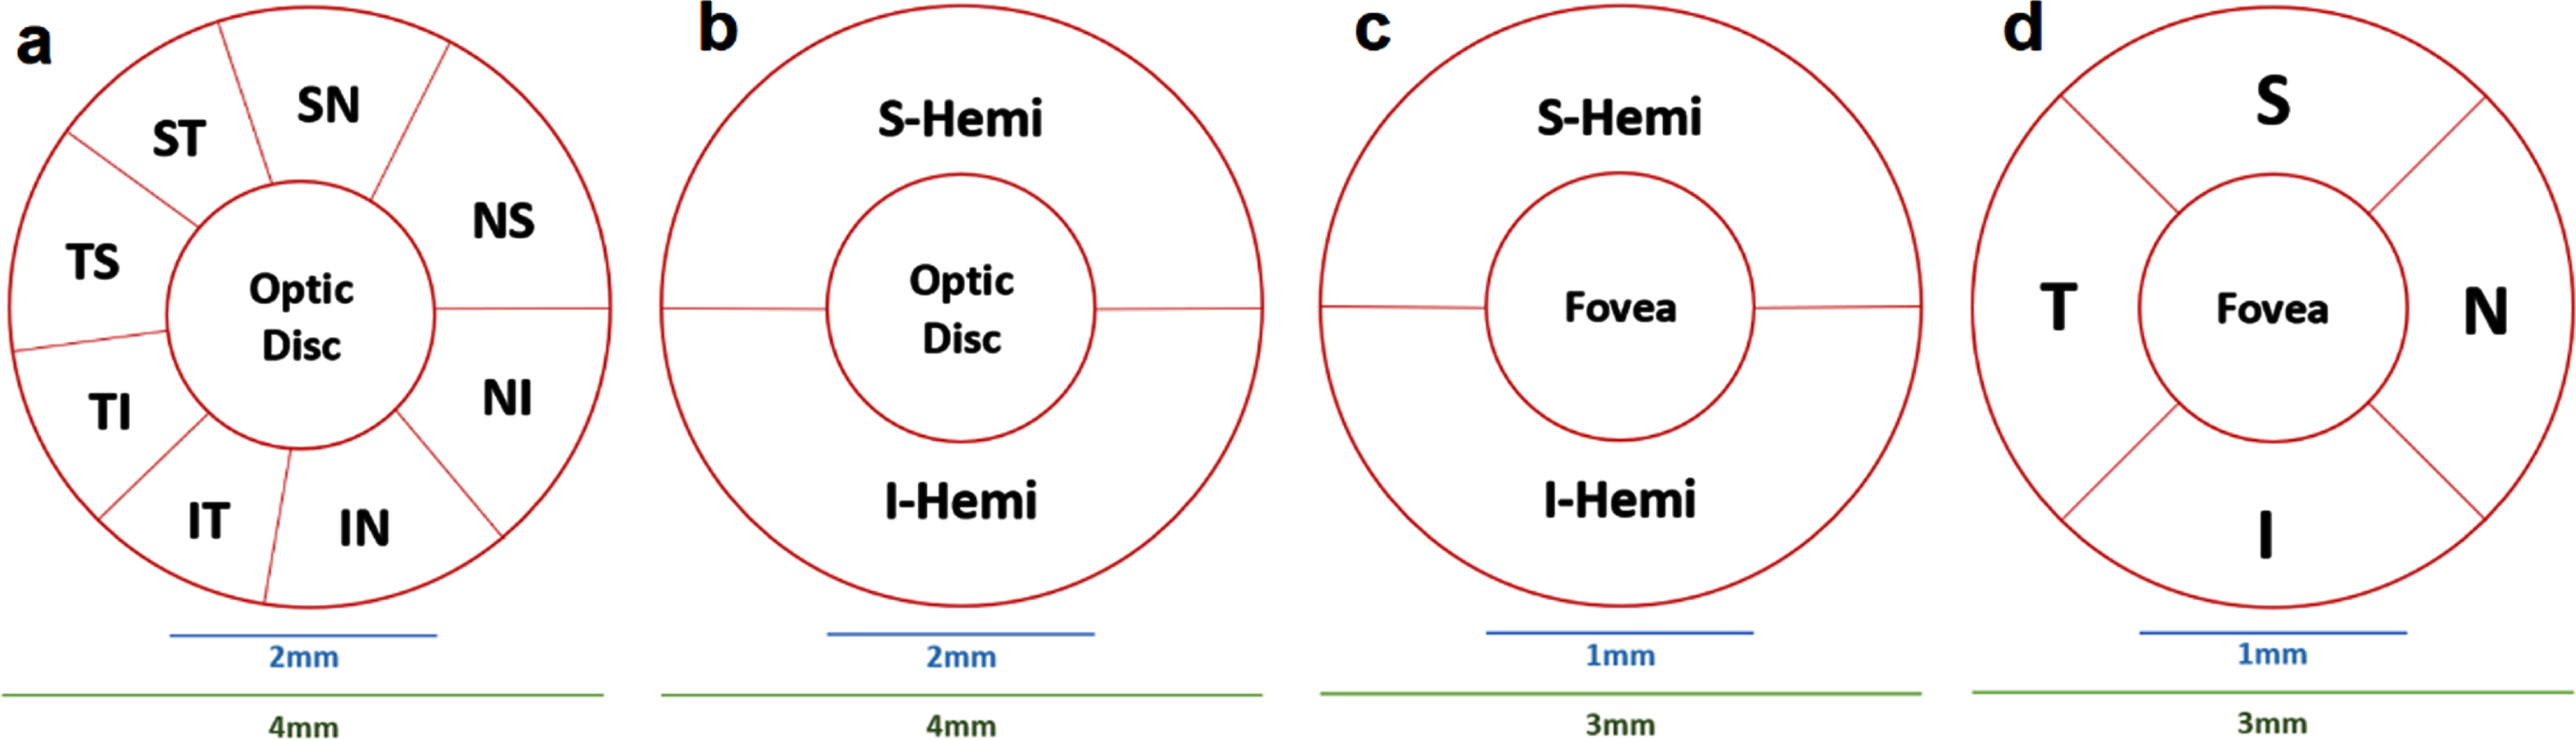 HD Angio Disc mode (optic disc) Report Layout Legend: a) Garway-Heath (GH) map [31]; b) Hemisphere Maps; 2) Angio Retina mode (macular) Report Layout Legend: c, d) Hemisphere and Quadrant Maps [32].